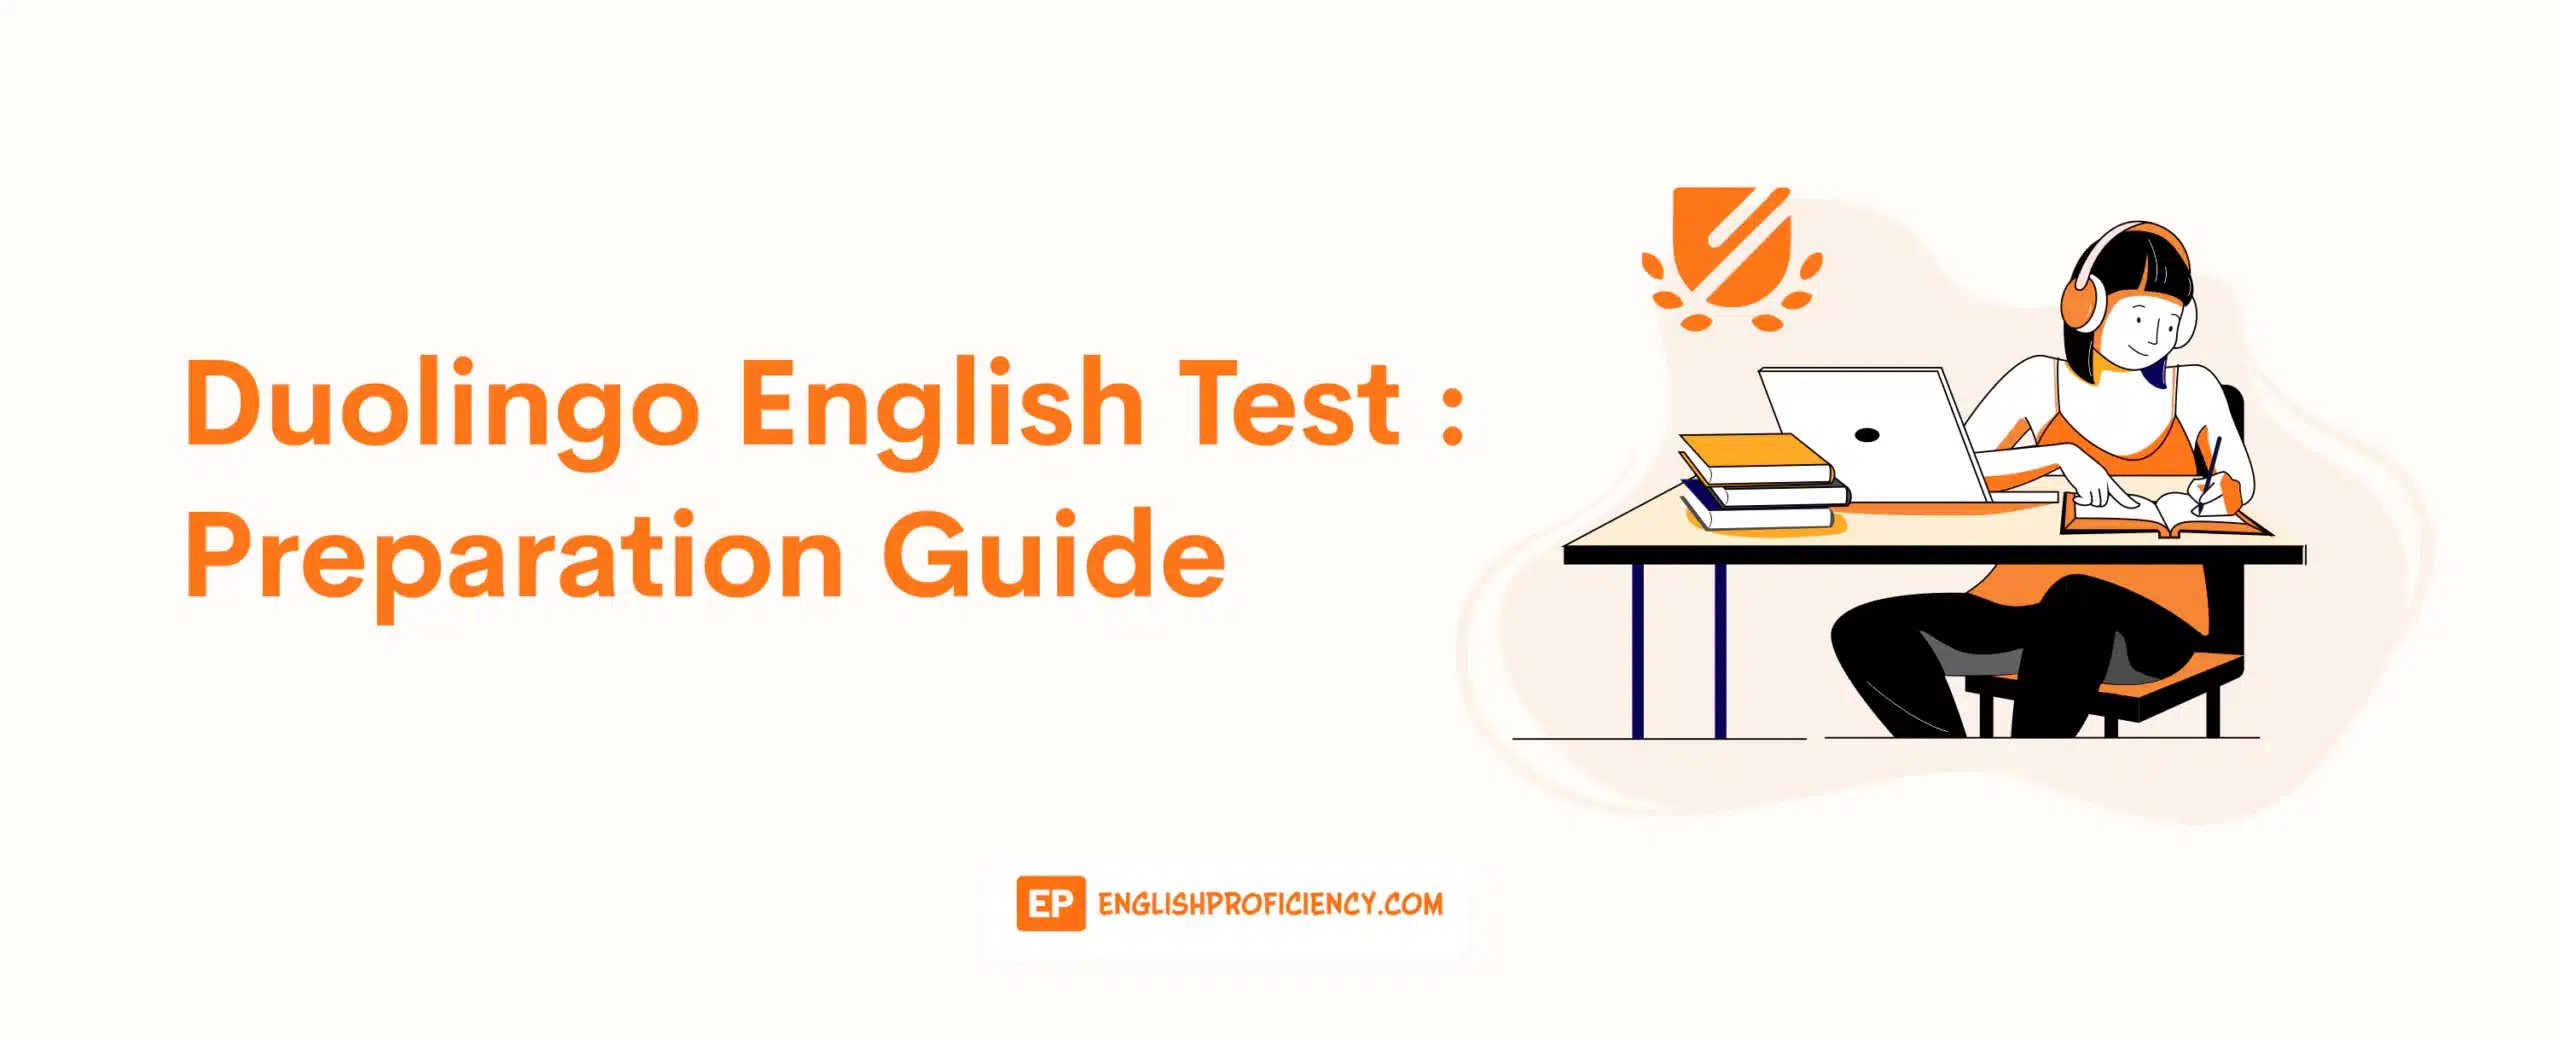 Duolingo English Test Preparation Guide